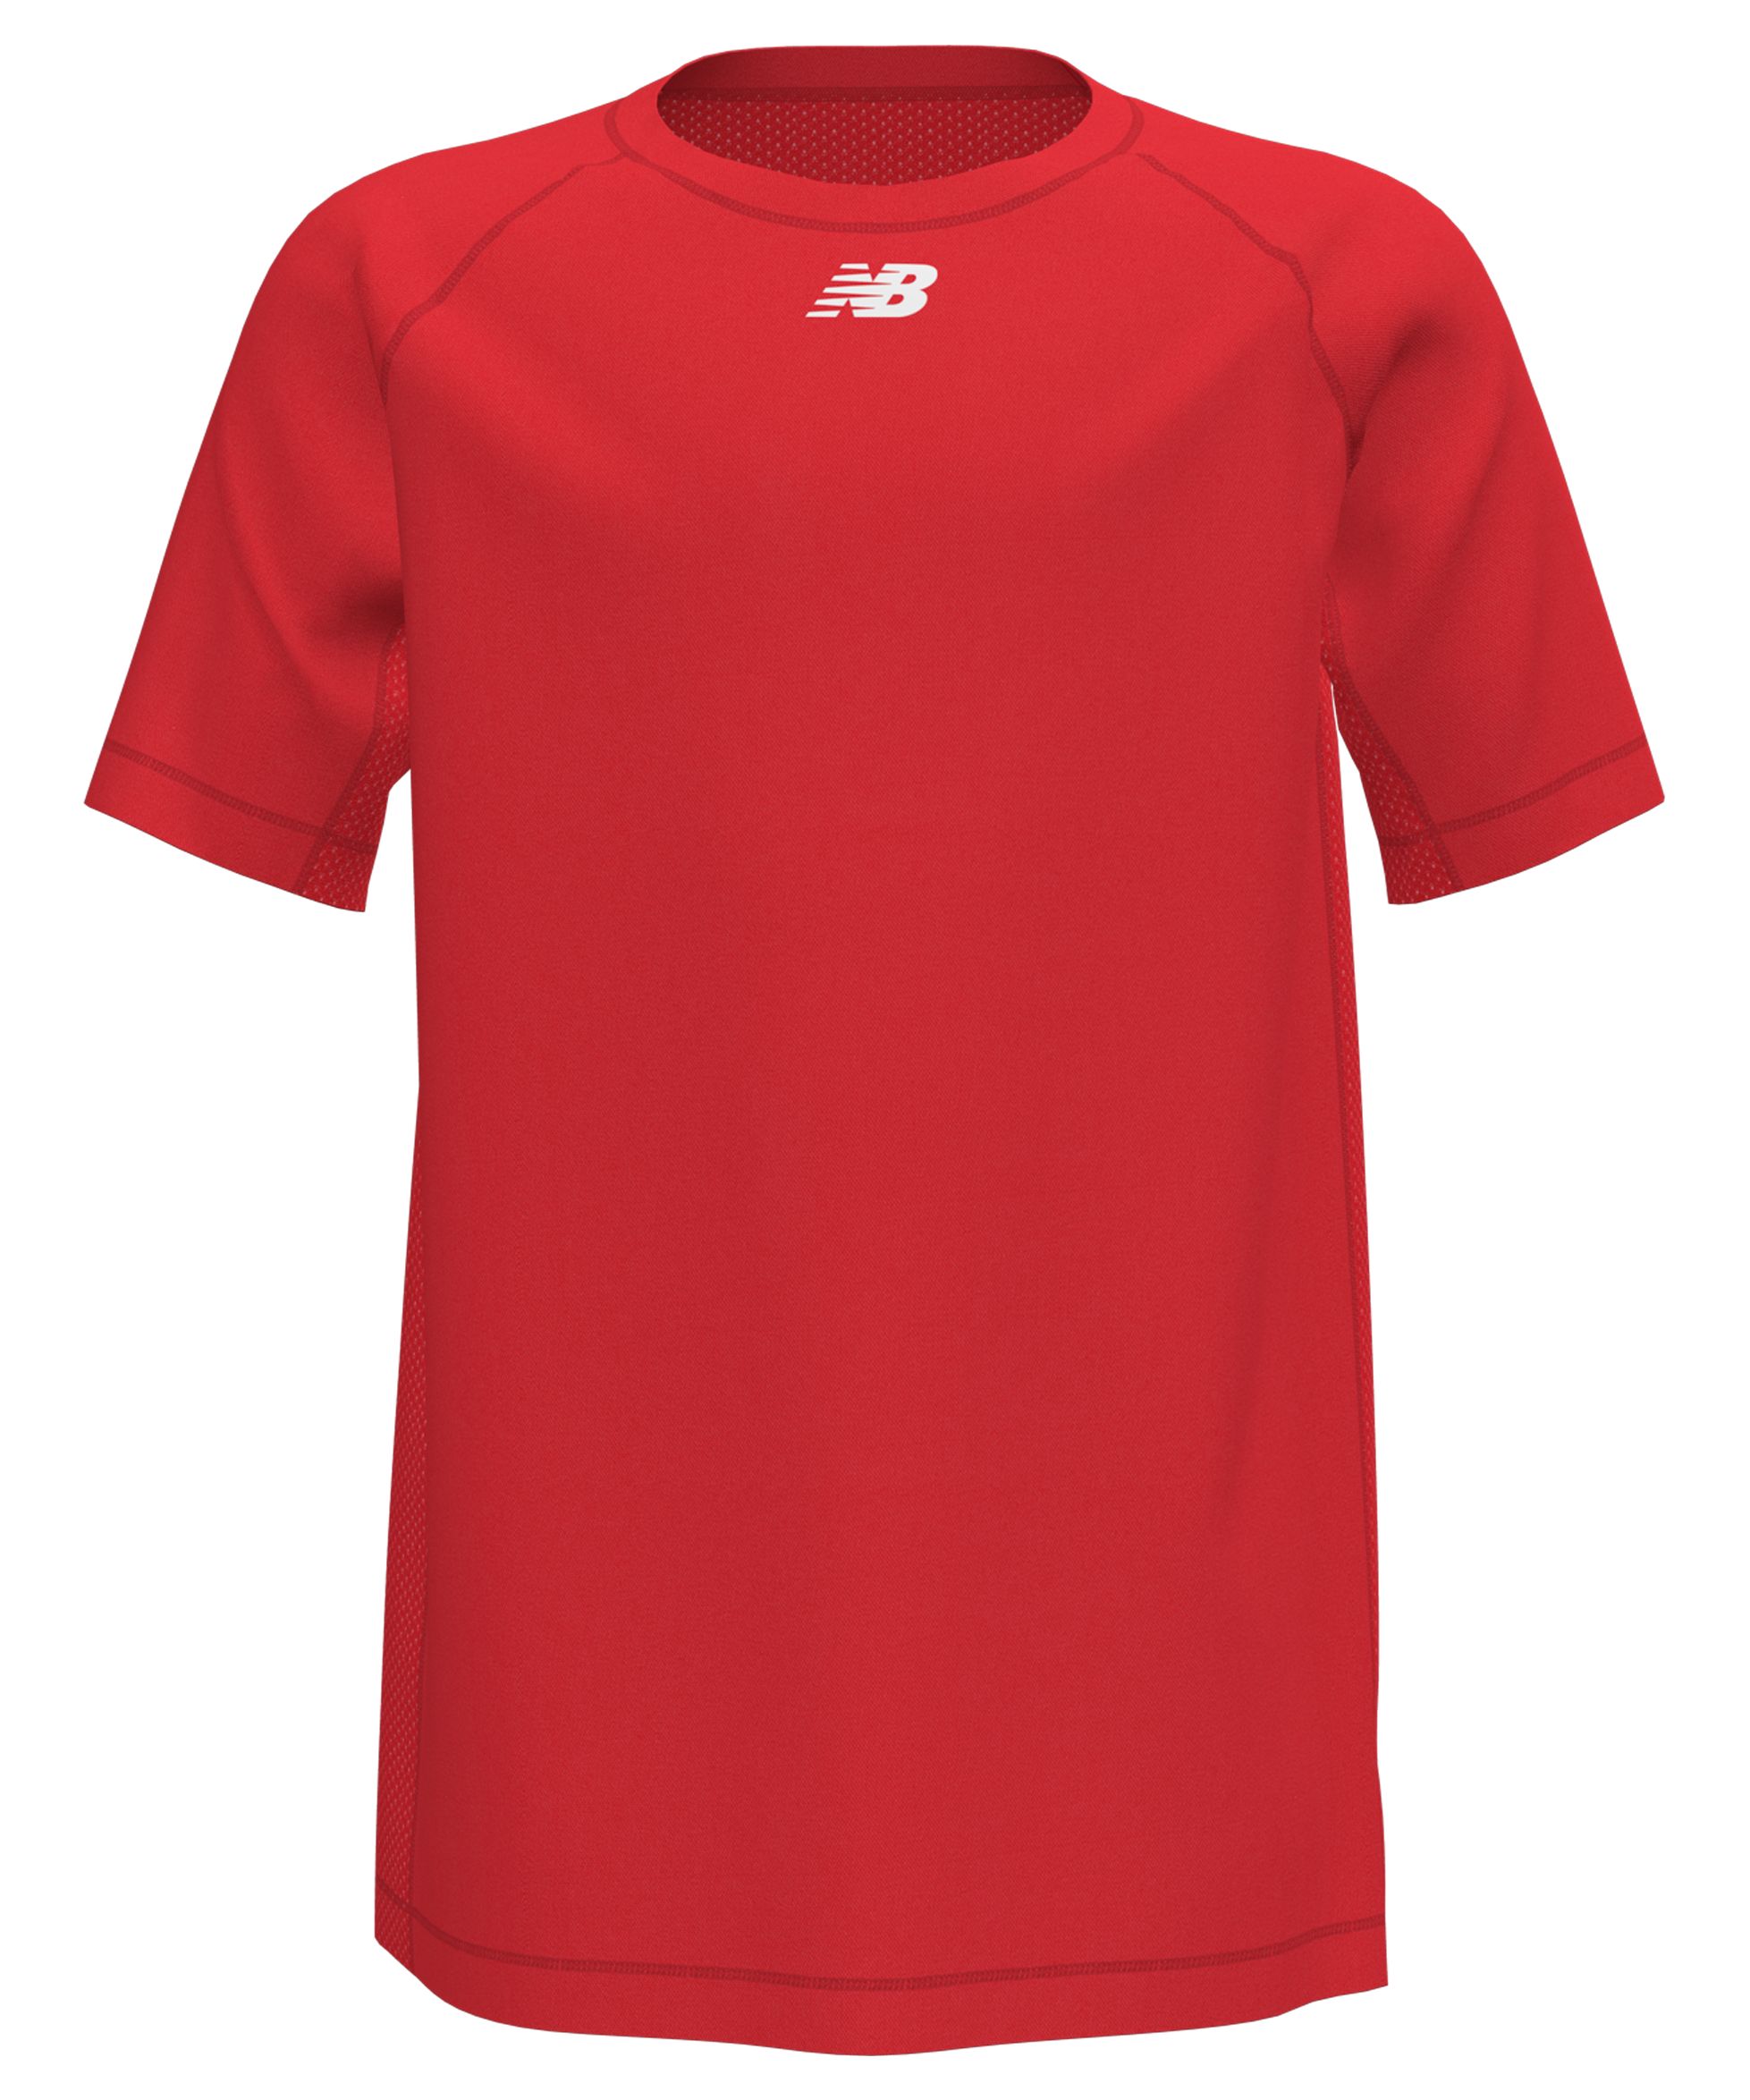 Team Tops Jersey Club Shirts Sleeve Custom Baseball Short Plain Customized  Fan